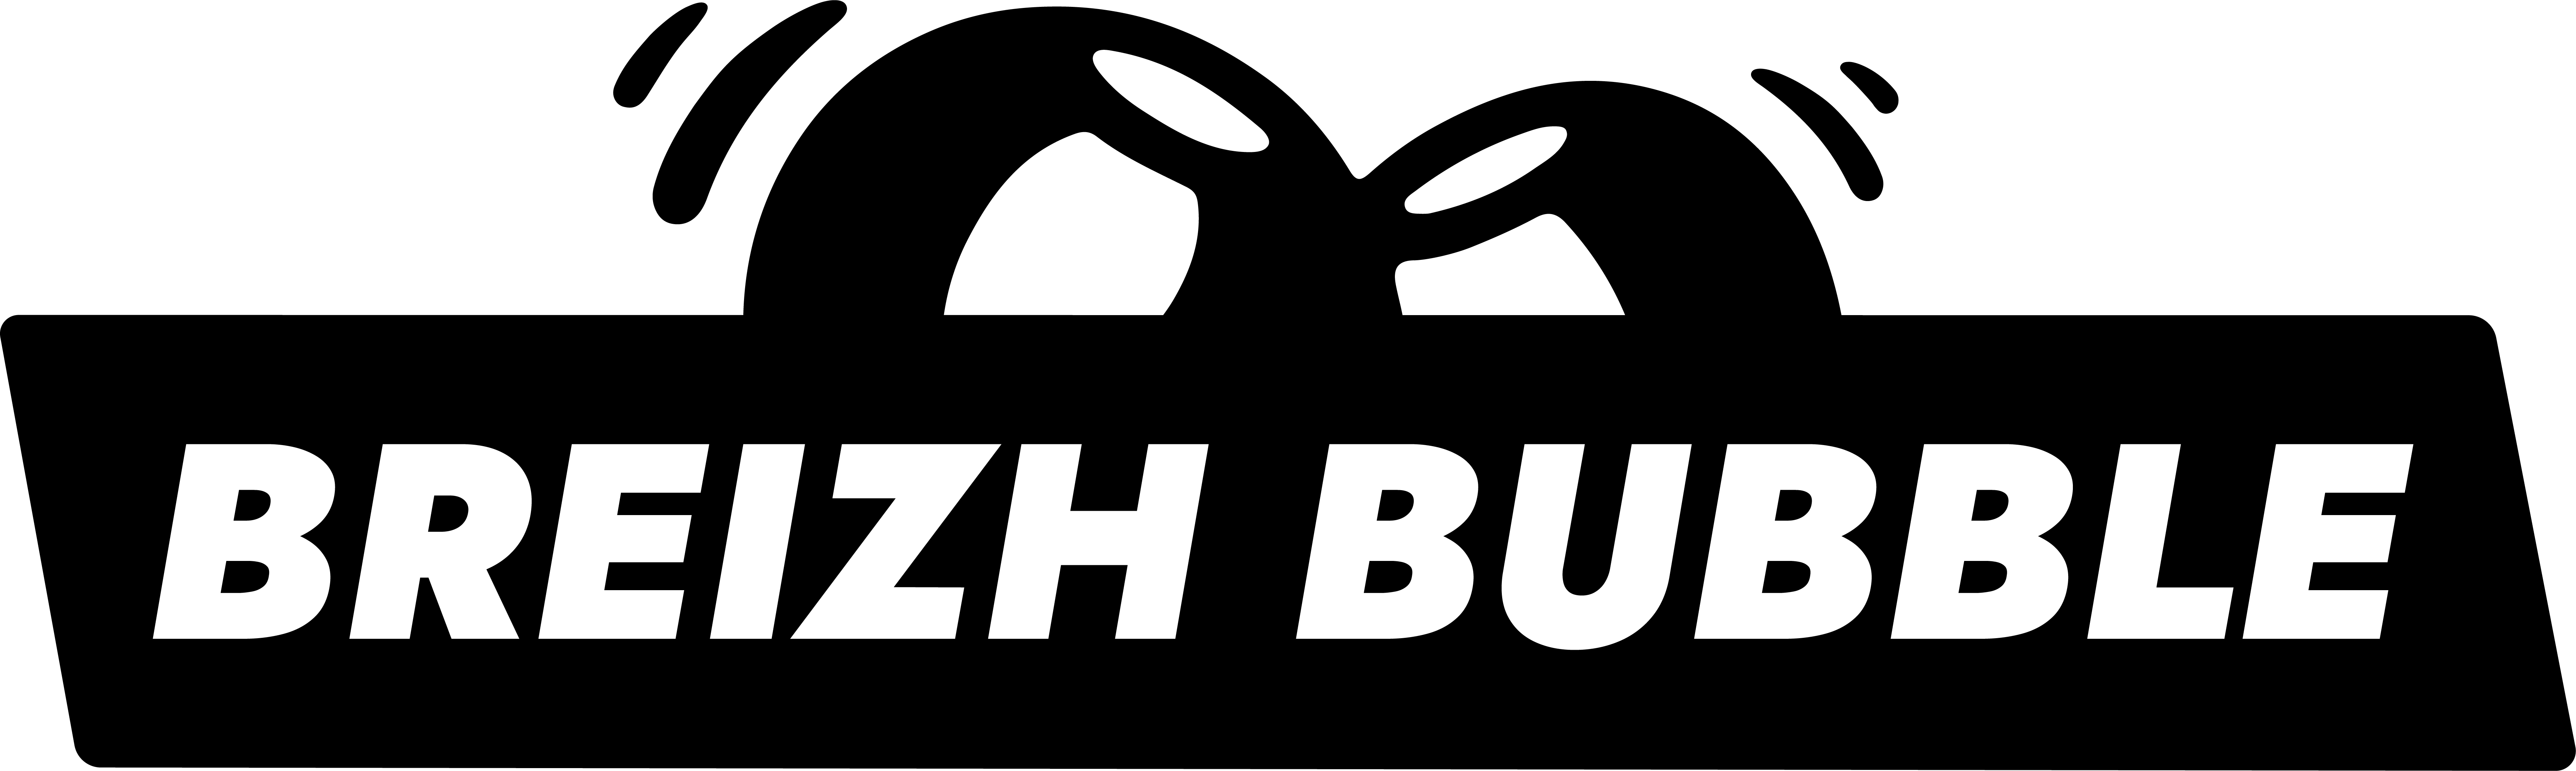 logo_noir